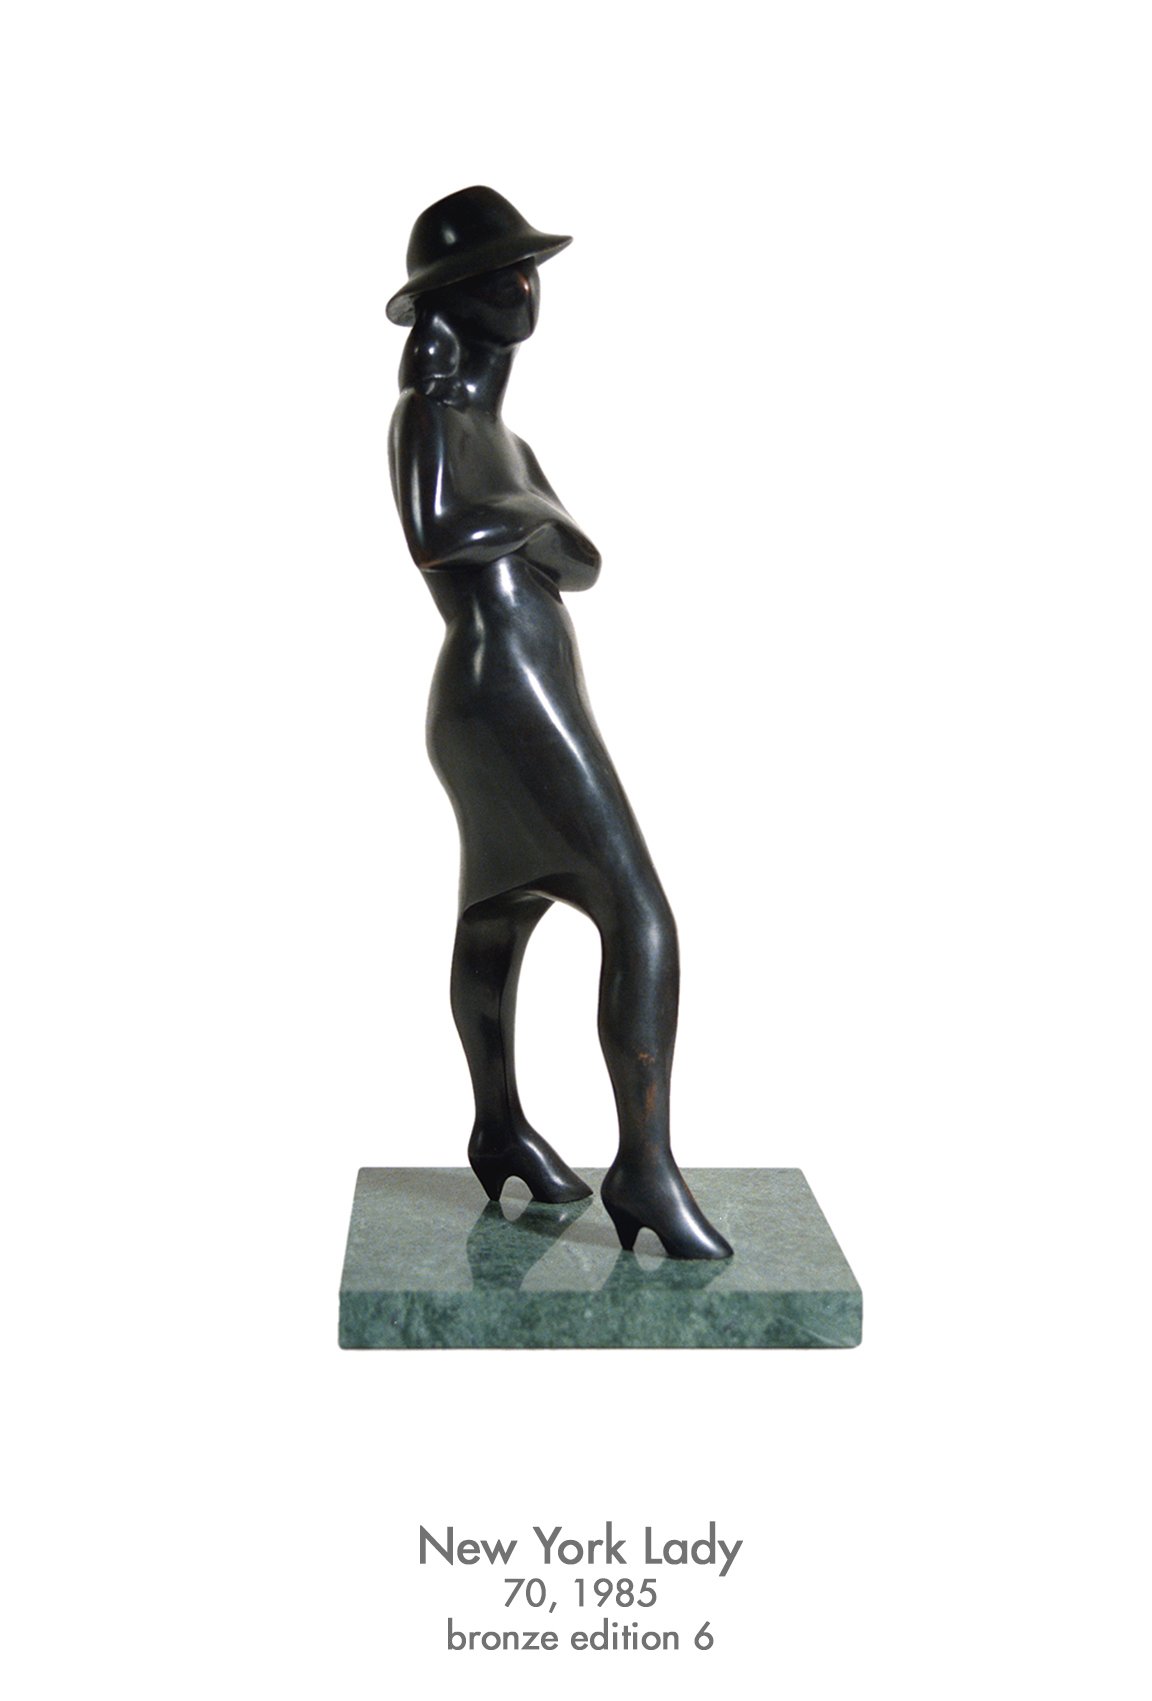 New York Lady, 1985, bronze edition 6, #70 